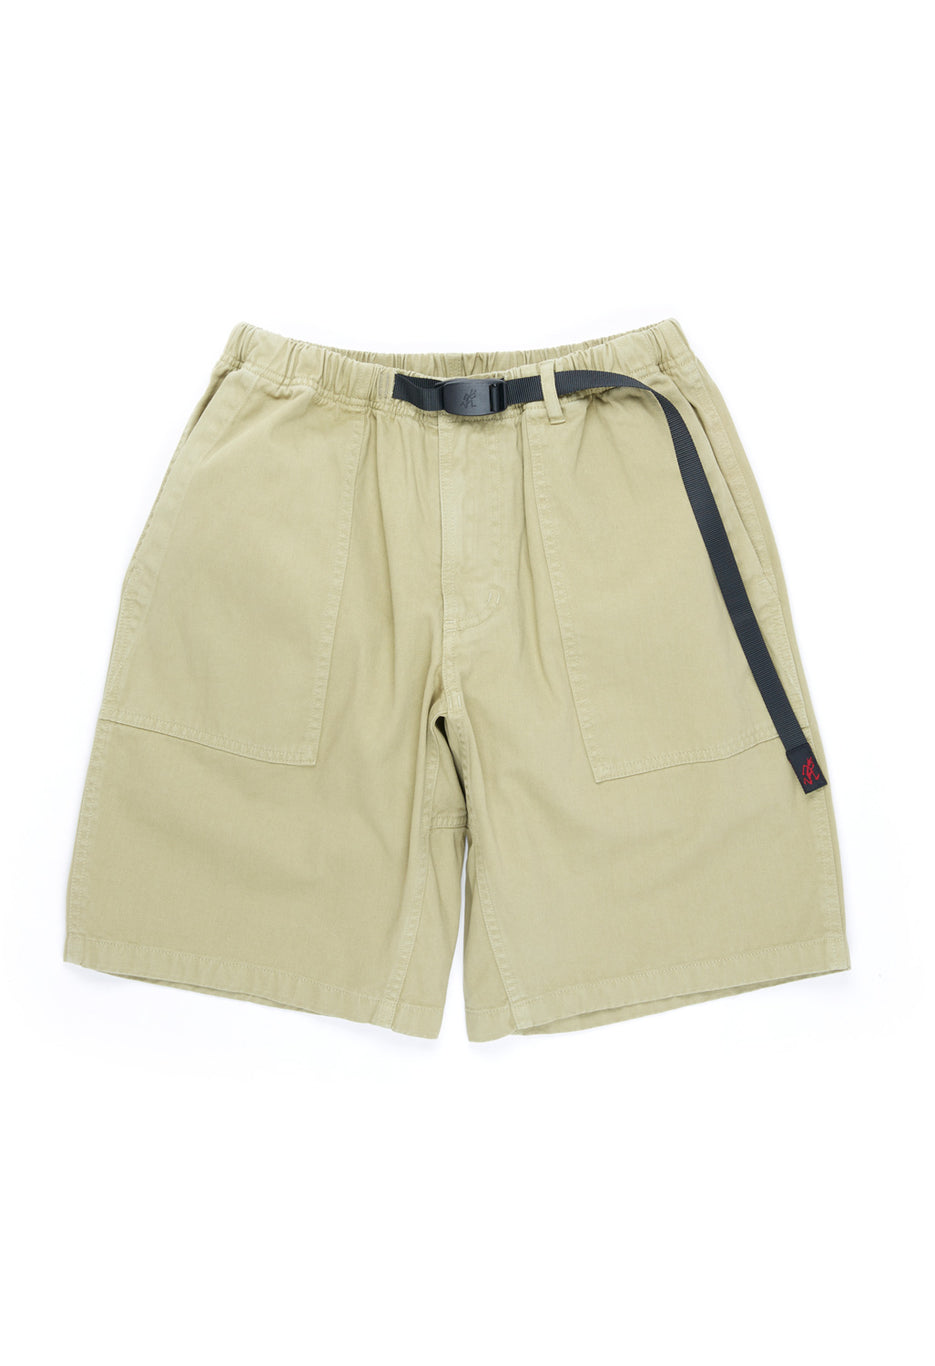 Gramicci Men's Ridge Shorts - Faded Olive